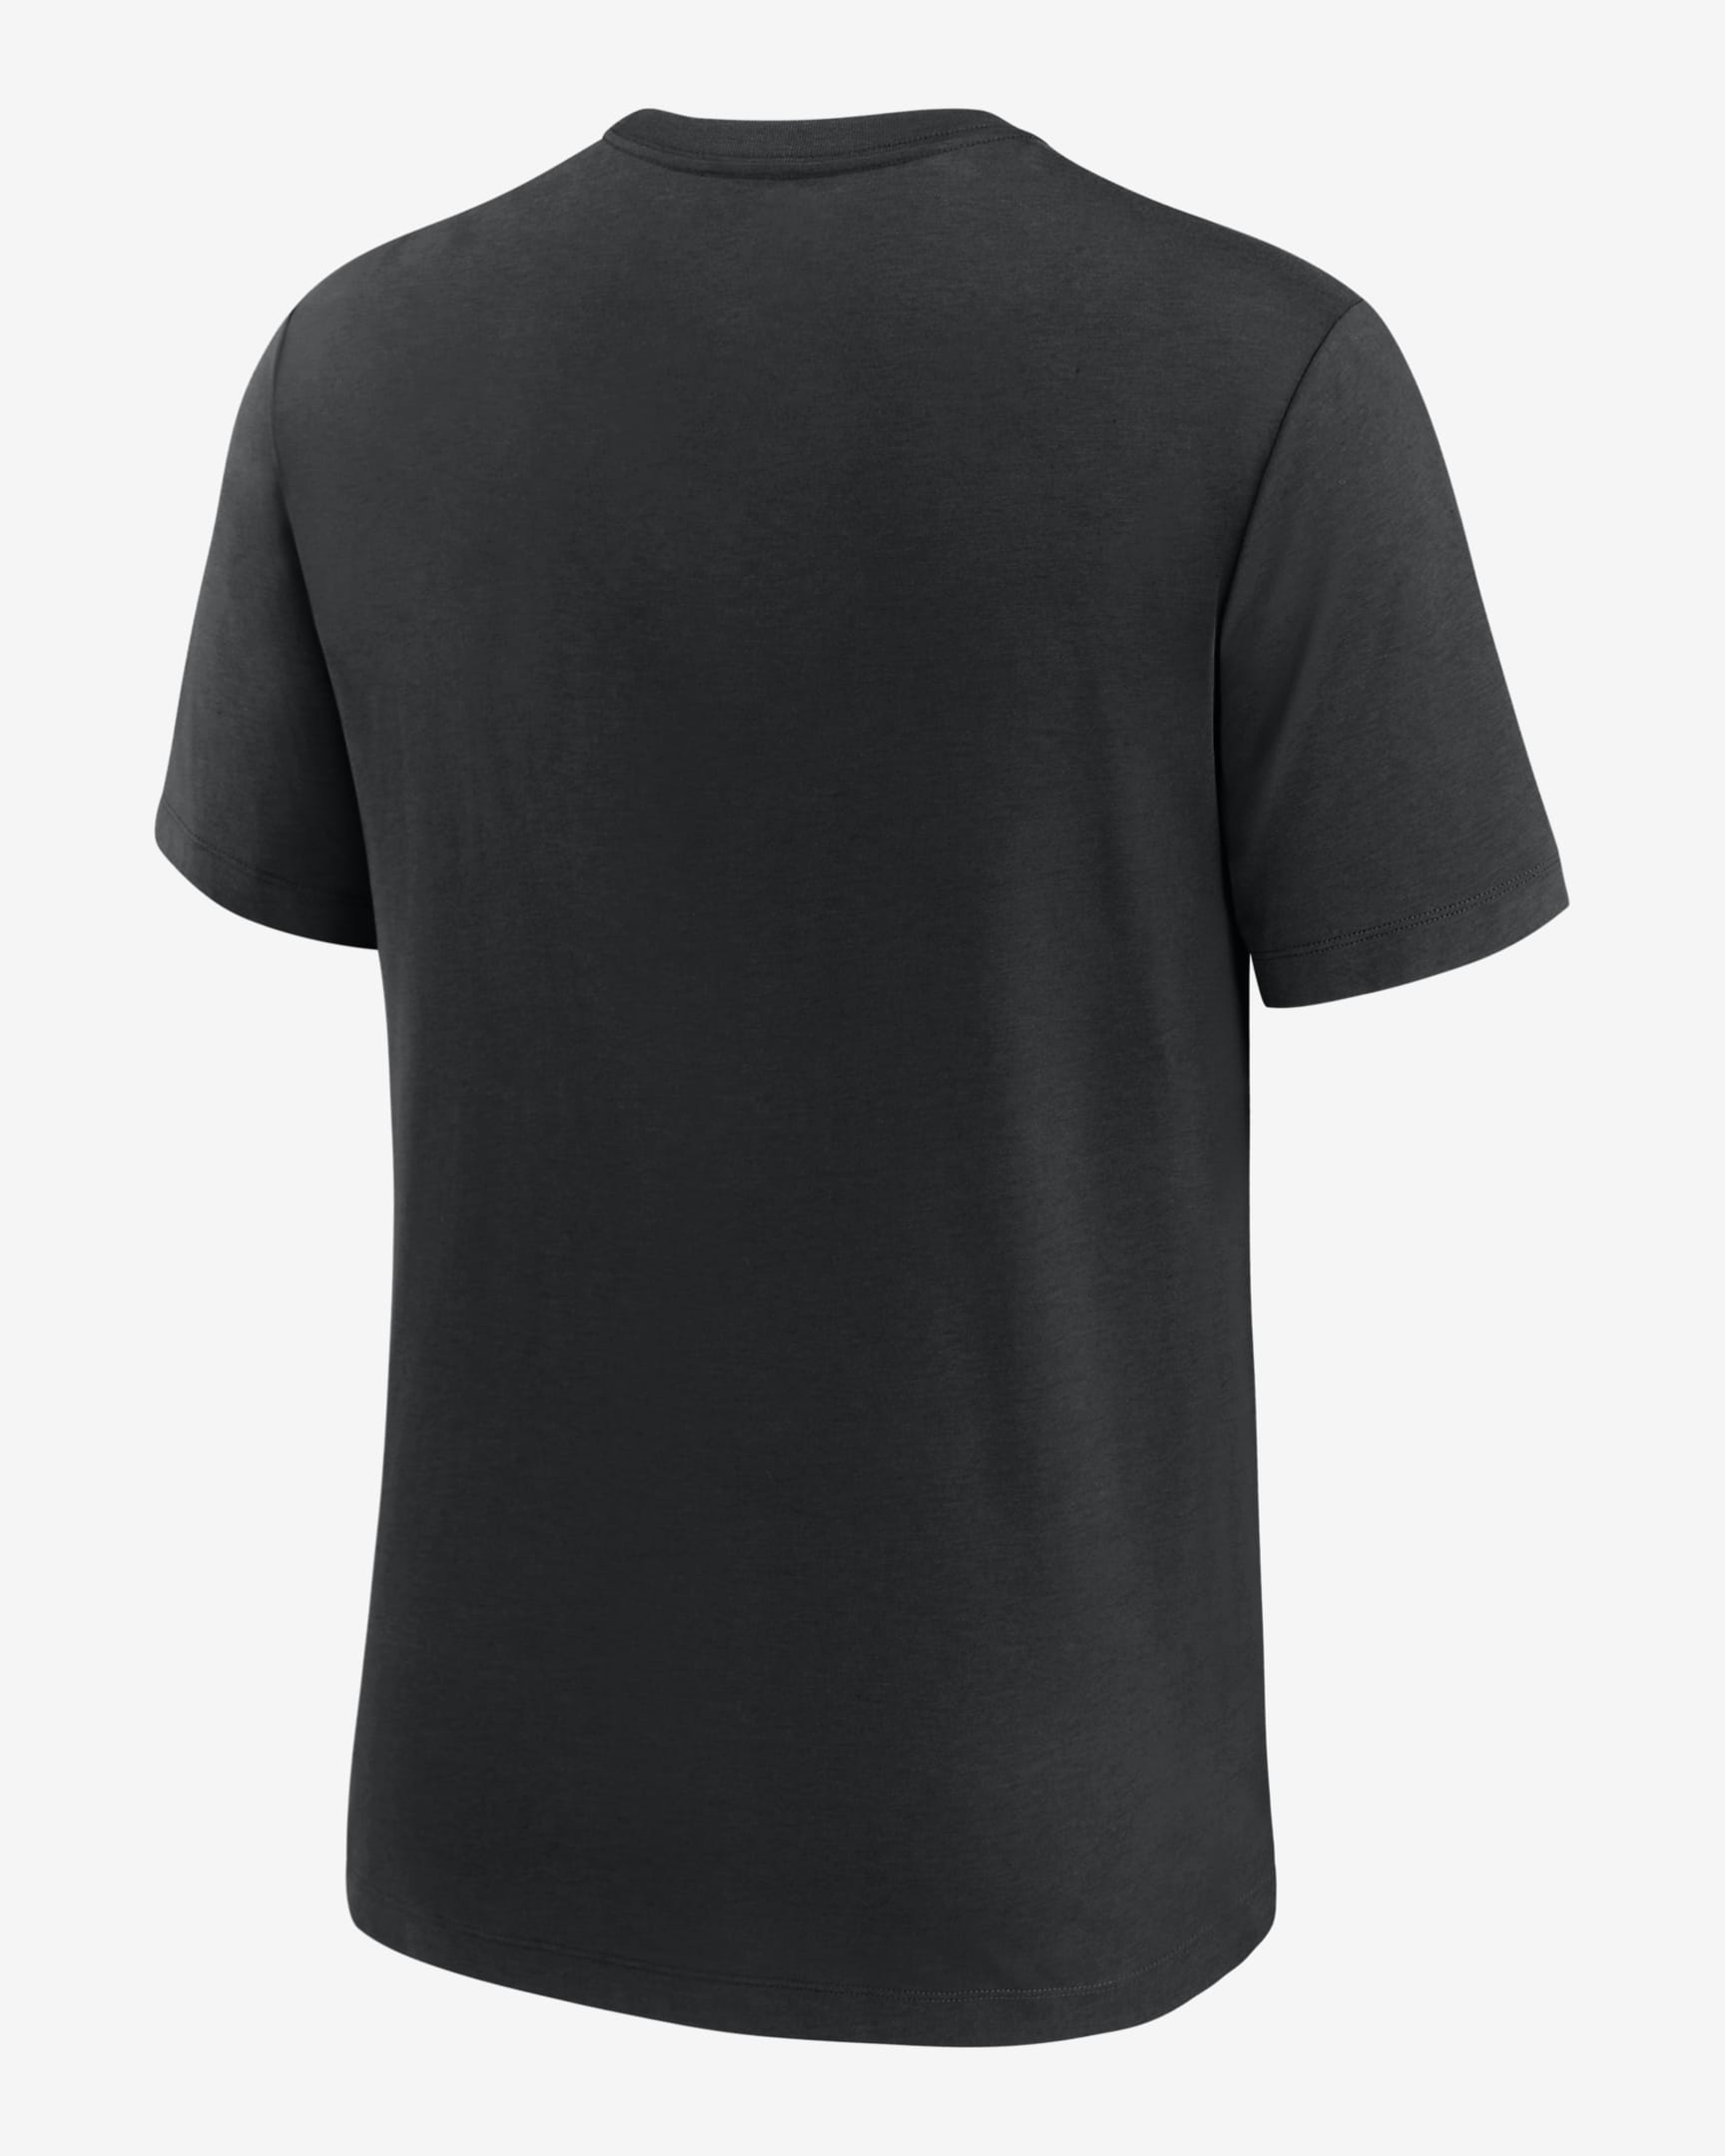 New Orleans Saints Rewind Logo Men's Nike NFL T-Shirt. Nike.com